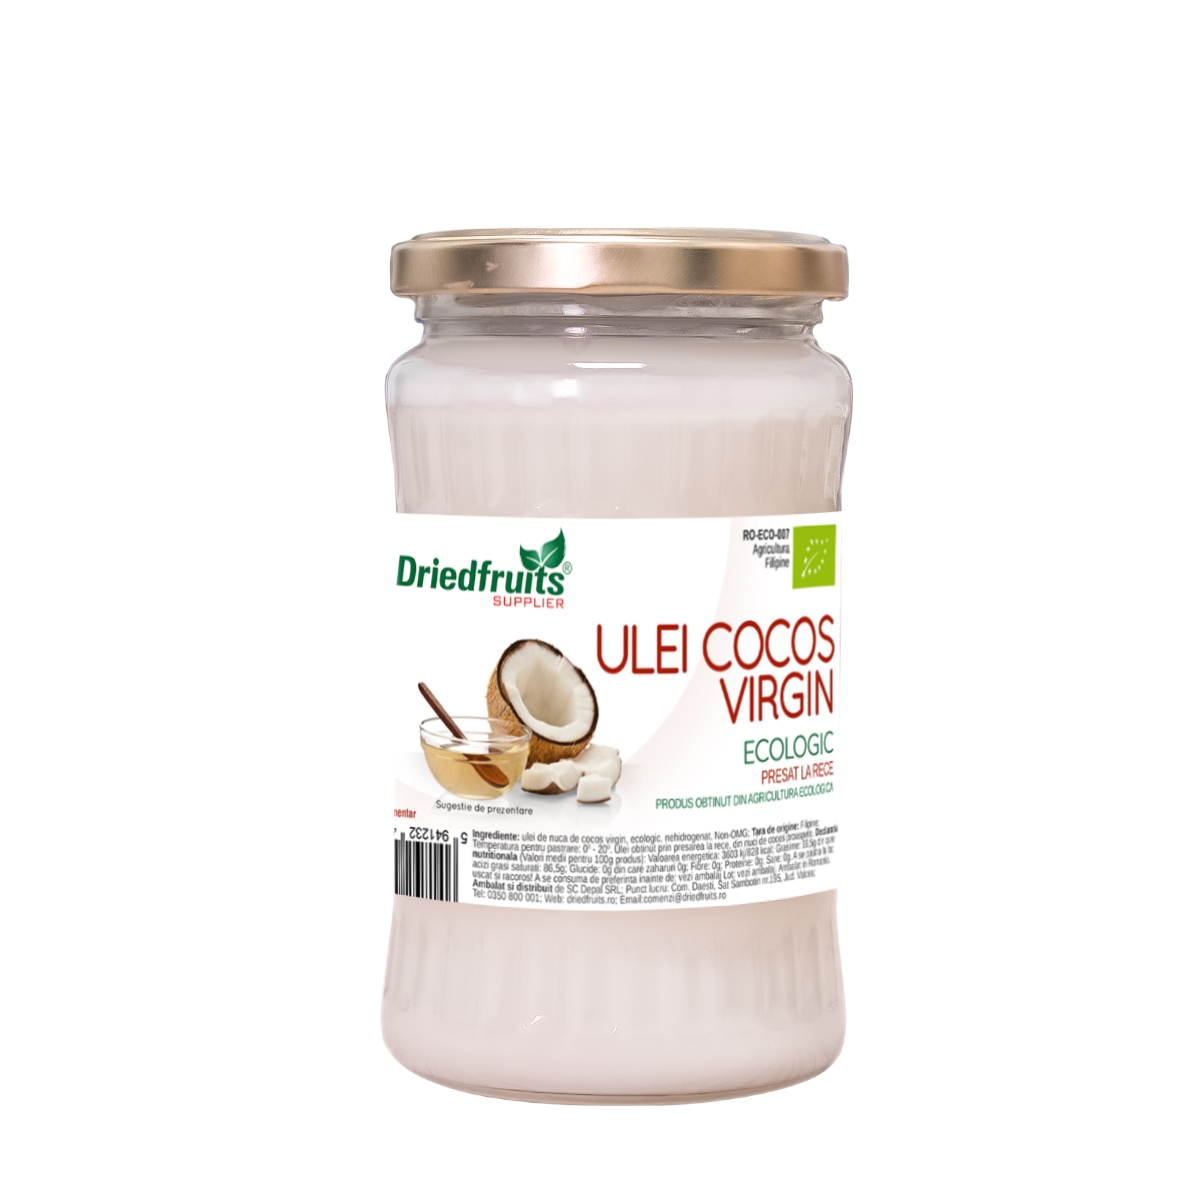 Ulei cocos virgin BIO (presat la rece) - 370 ml/300 g imagine produs 2021 Dried Fruits